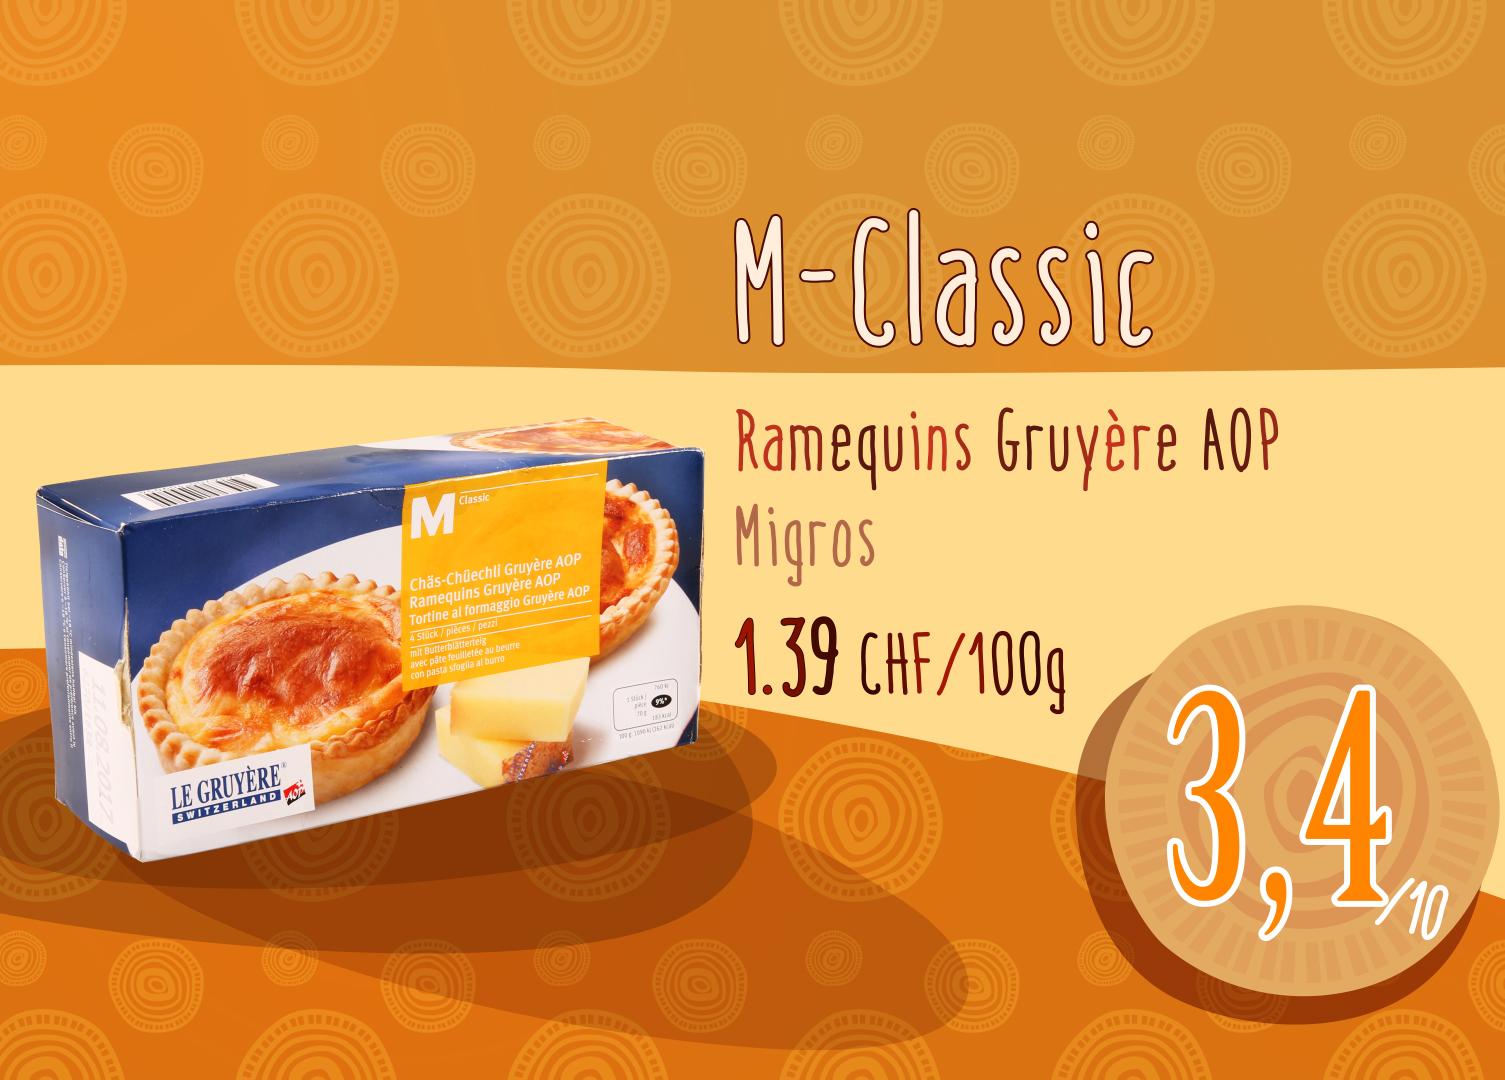 Ramequins Gruyère AOP - M-Classic - Migros.